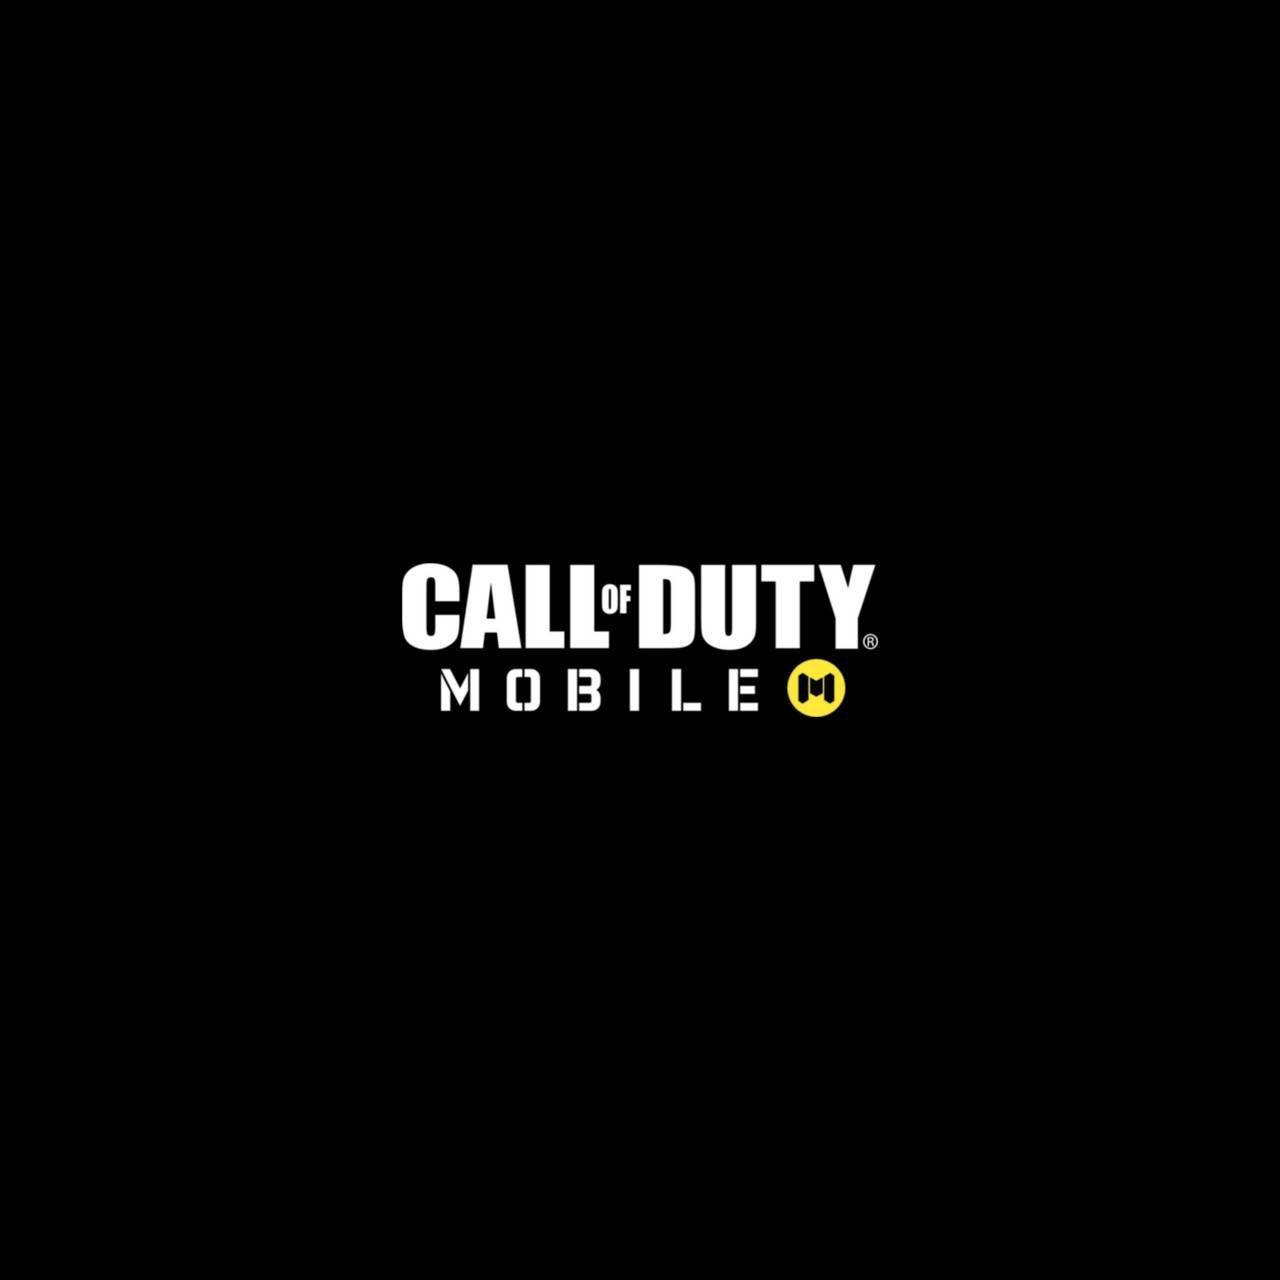 Call Of Duty Mobile Logo Black Background Portrait Wallpaper